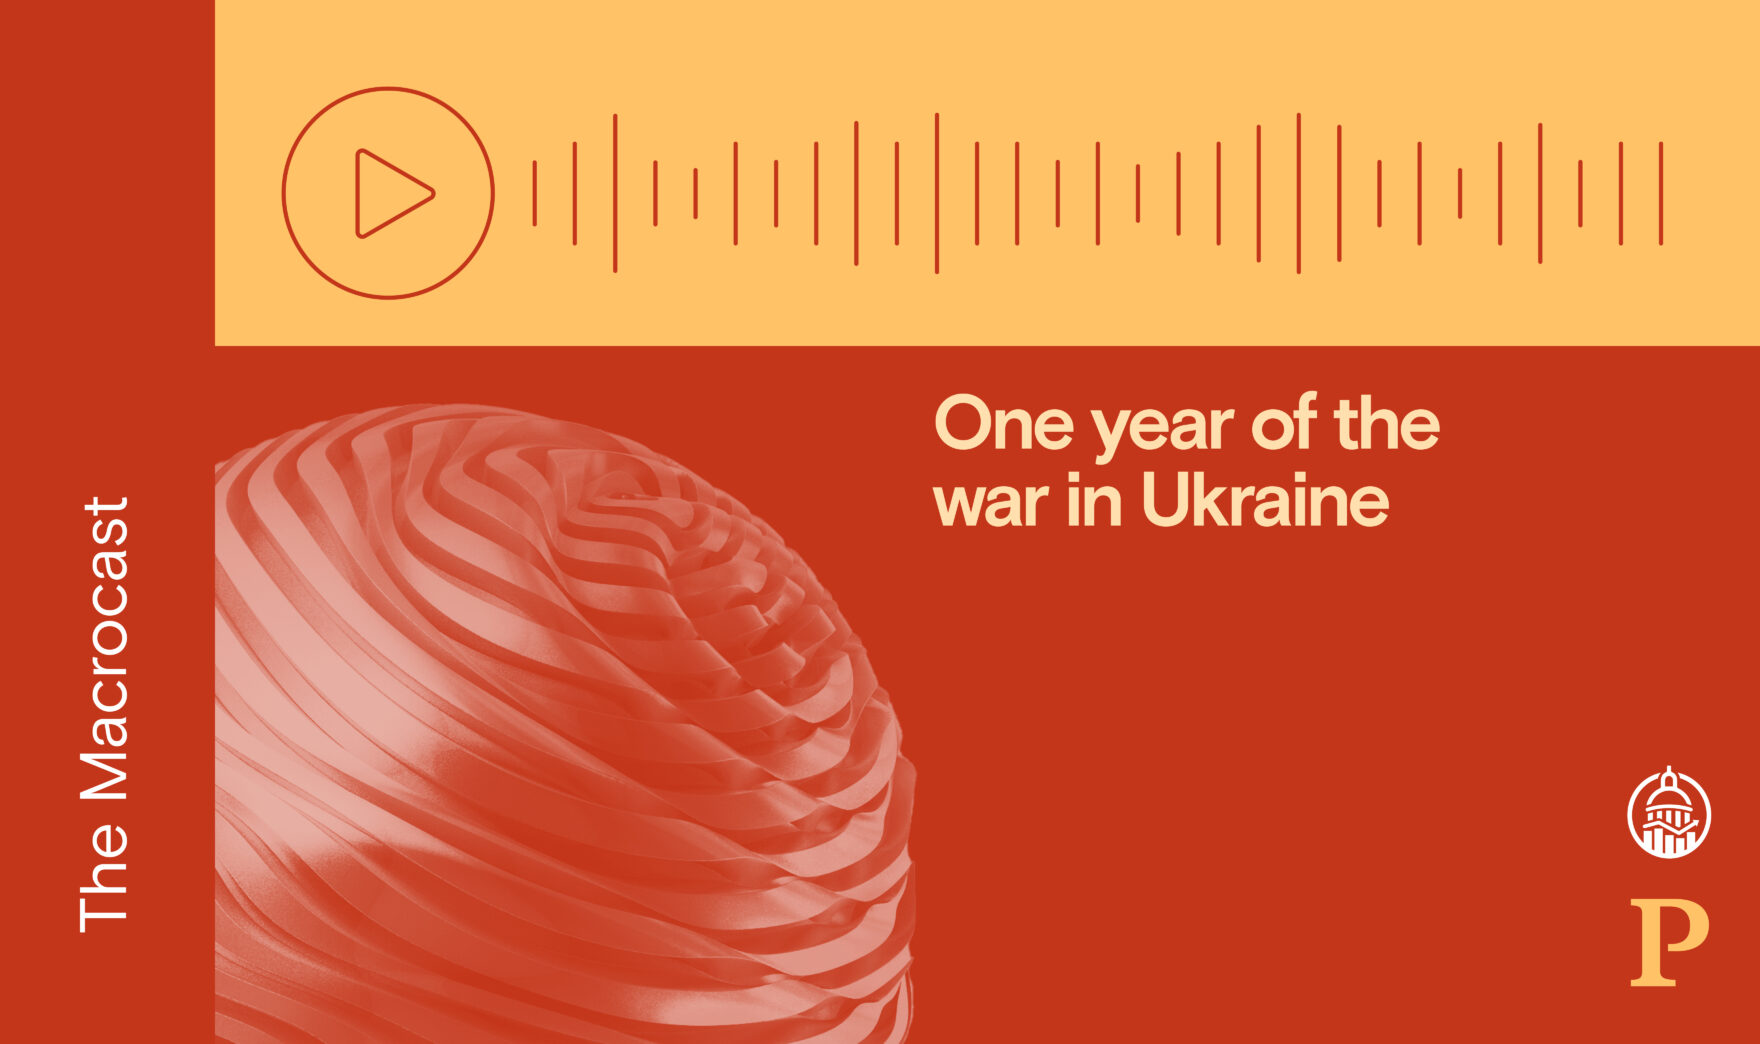 Macrocast: One year of the war in Ukraine